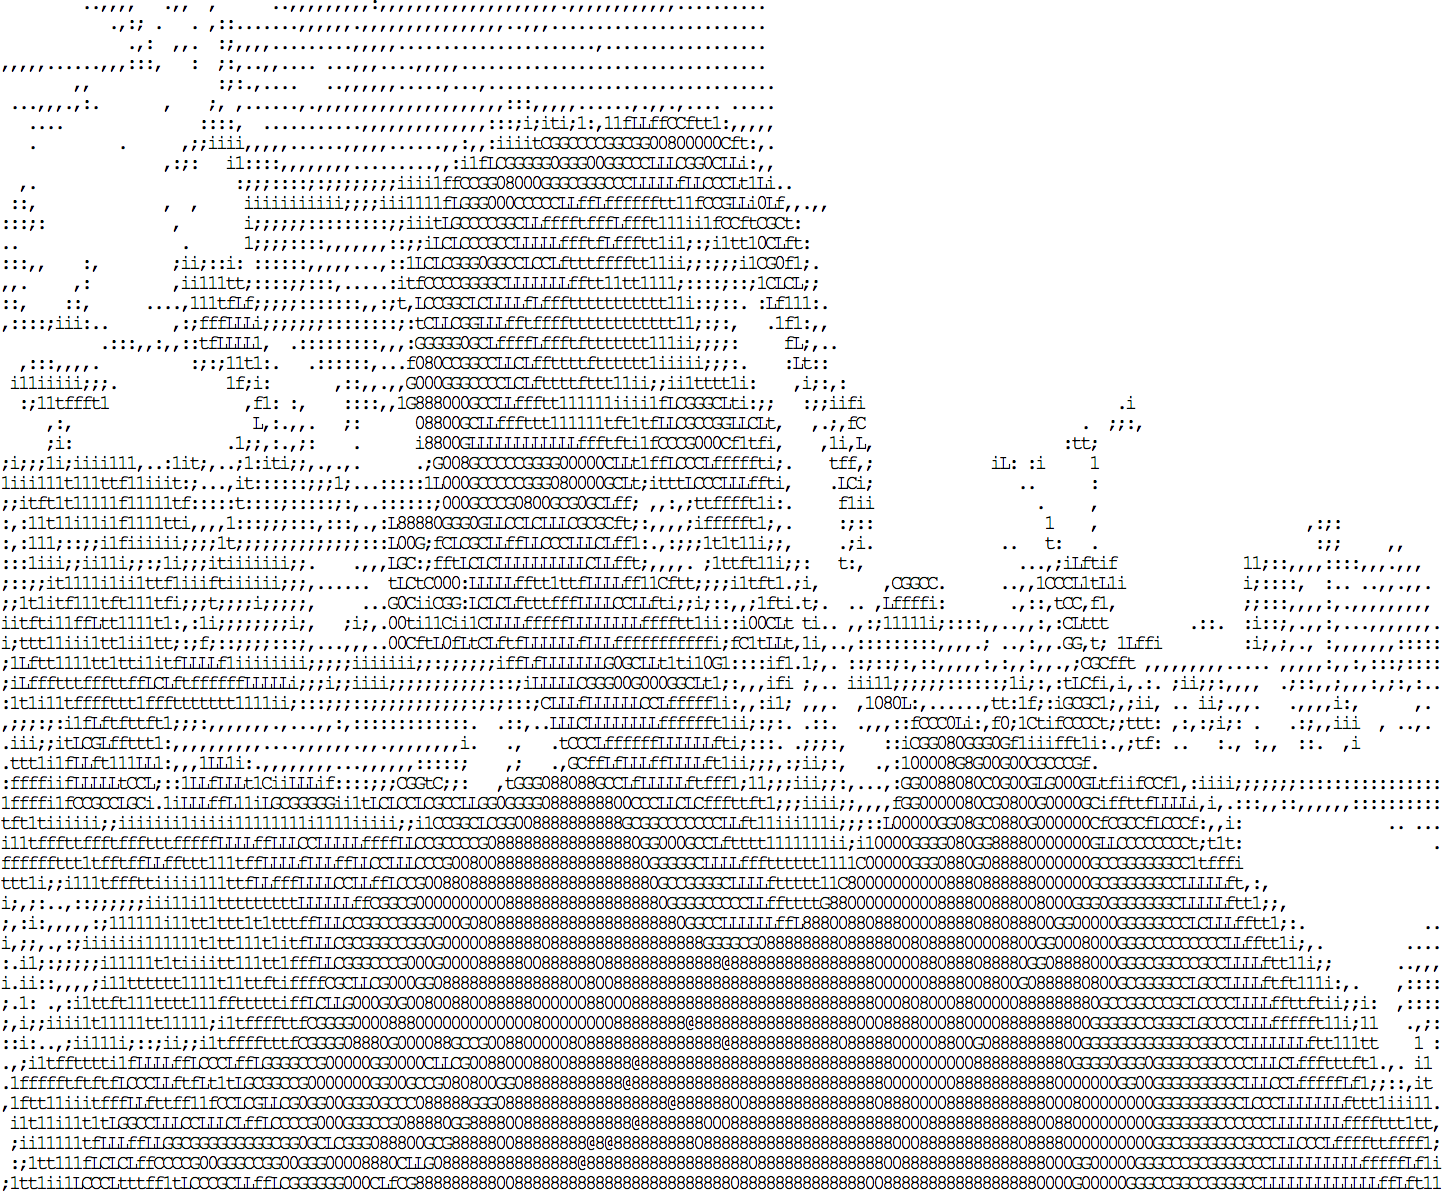 idevelop.ro/ascii-camera tarafından oluşturulan ASCII resmi